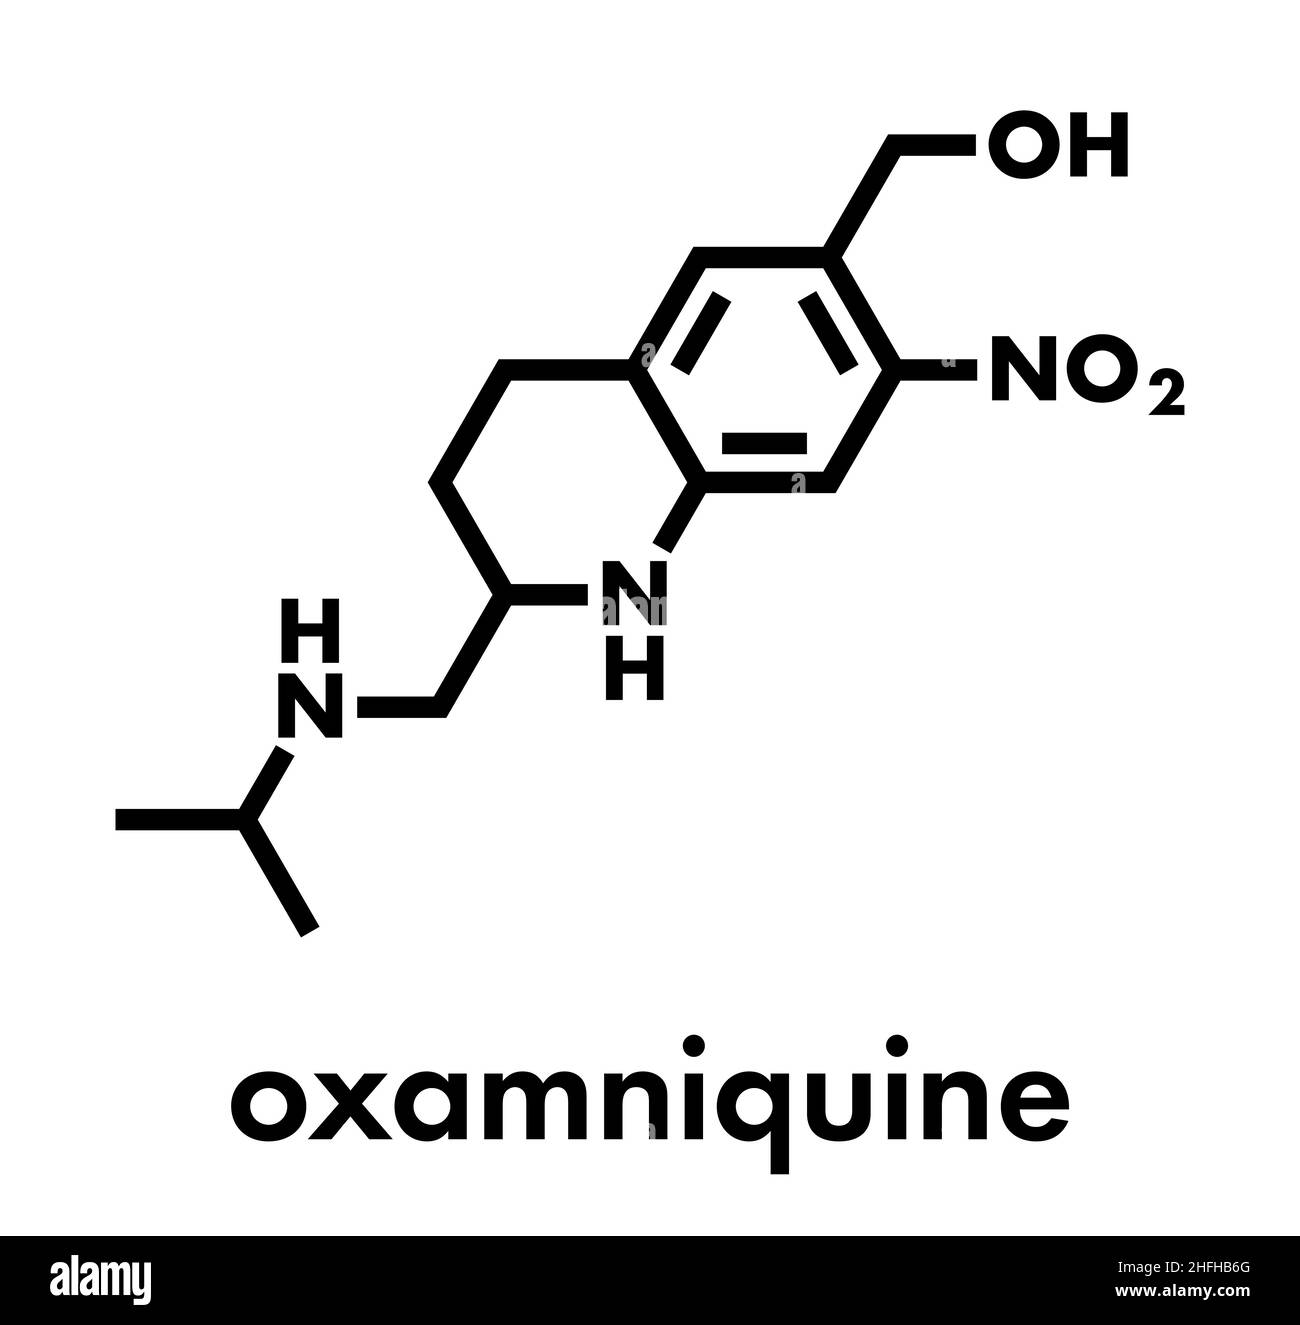 Oxamniquine anthelmintic drug molecule. Used to treat Schistosoma mansoni infections. Skeletal formula. Stock Vector